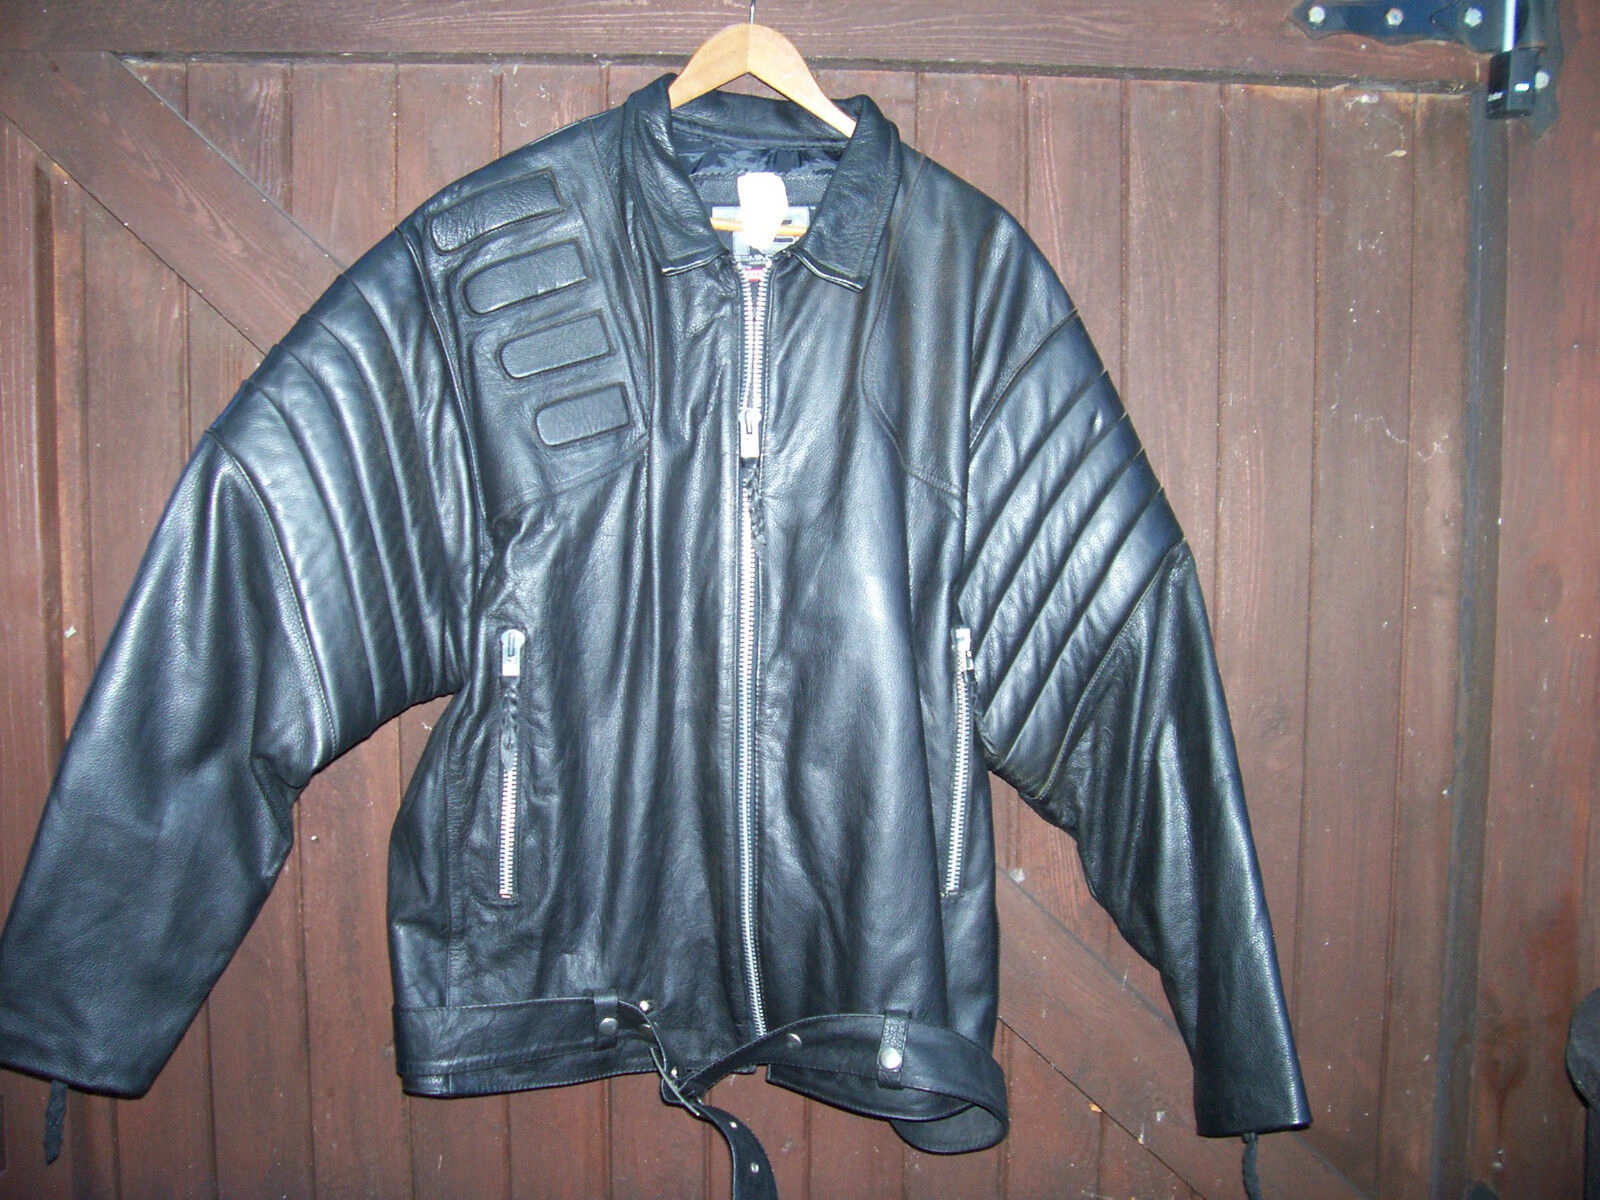   Indian Motorcycle Leather Jacket Terminator /Arnold schwarzenegger  RARE